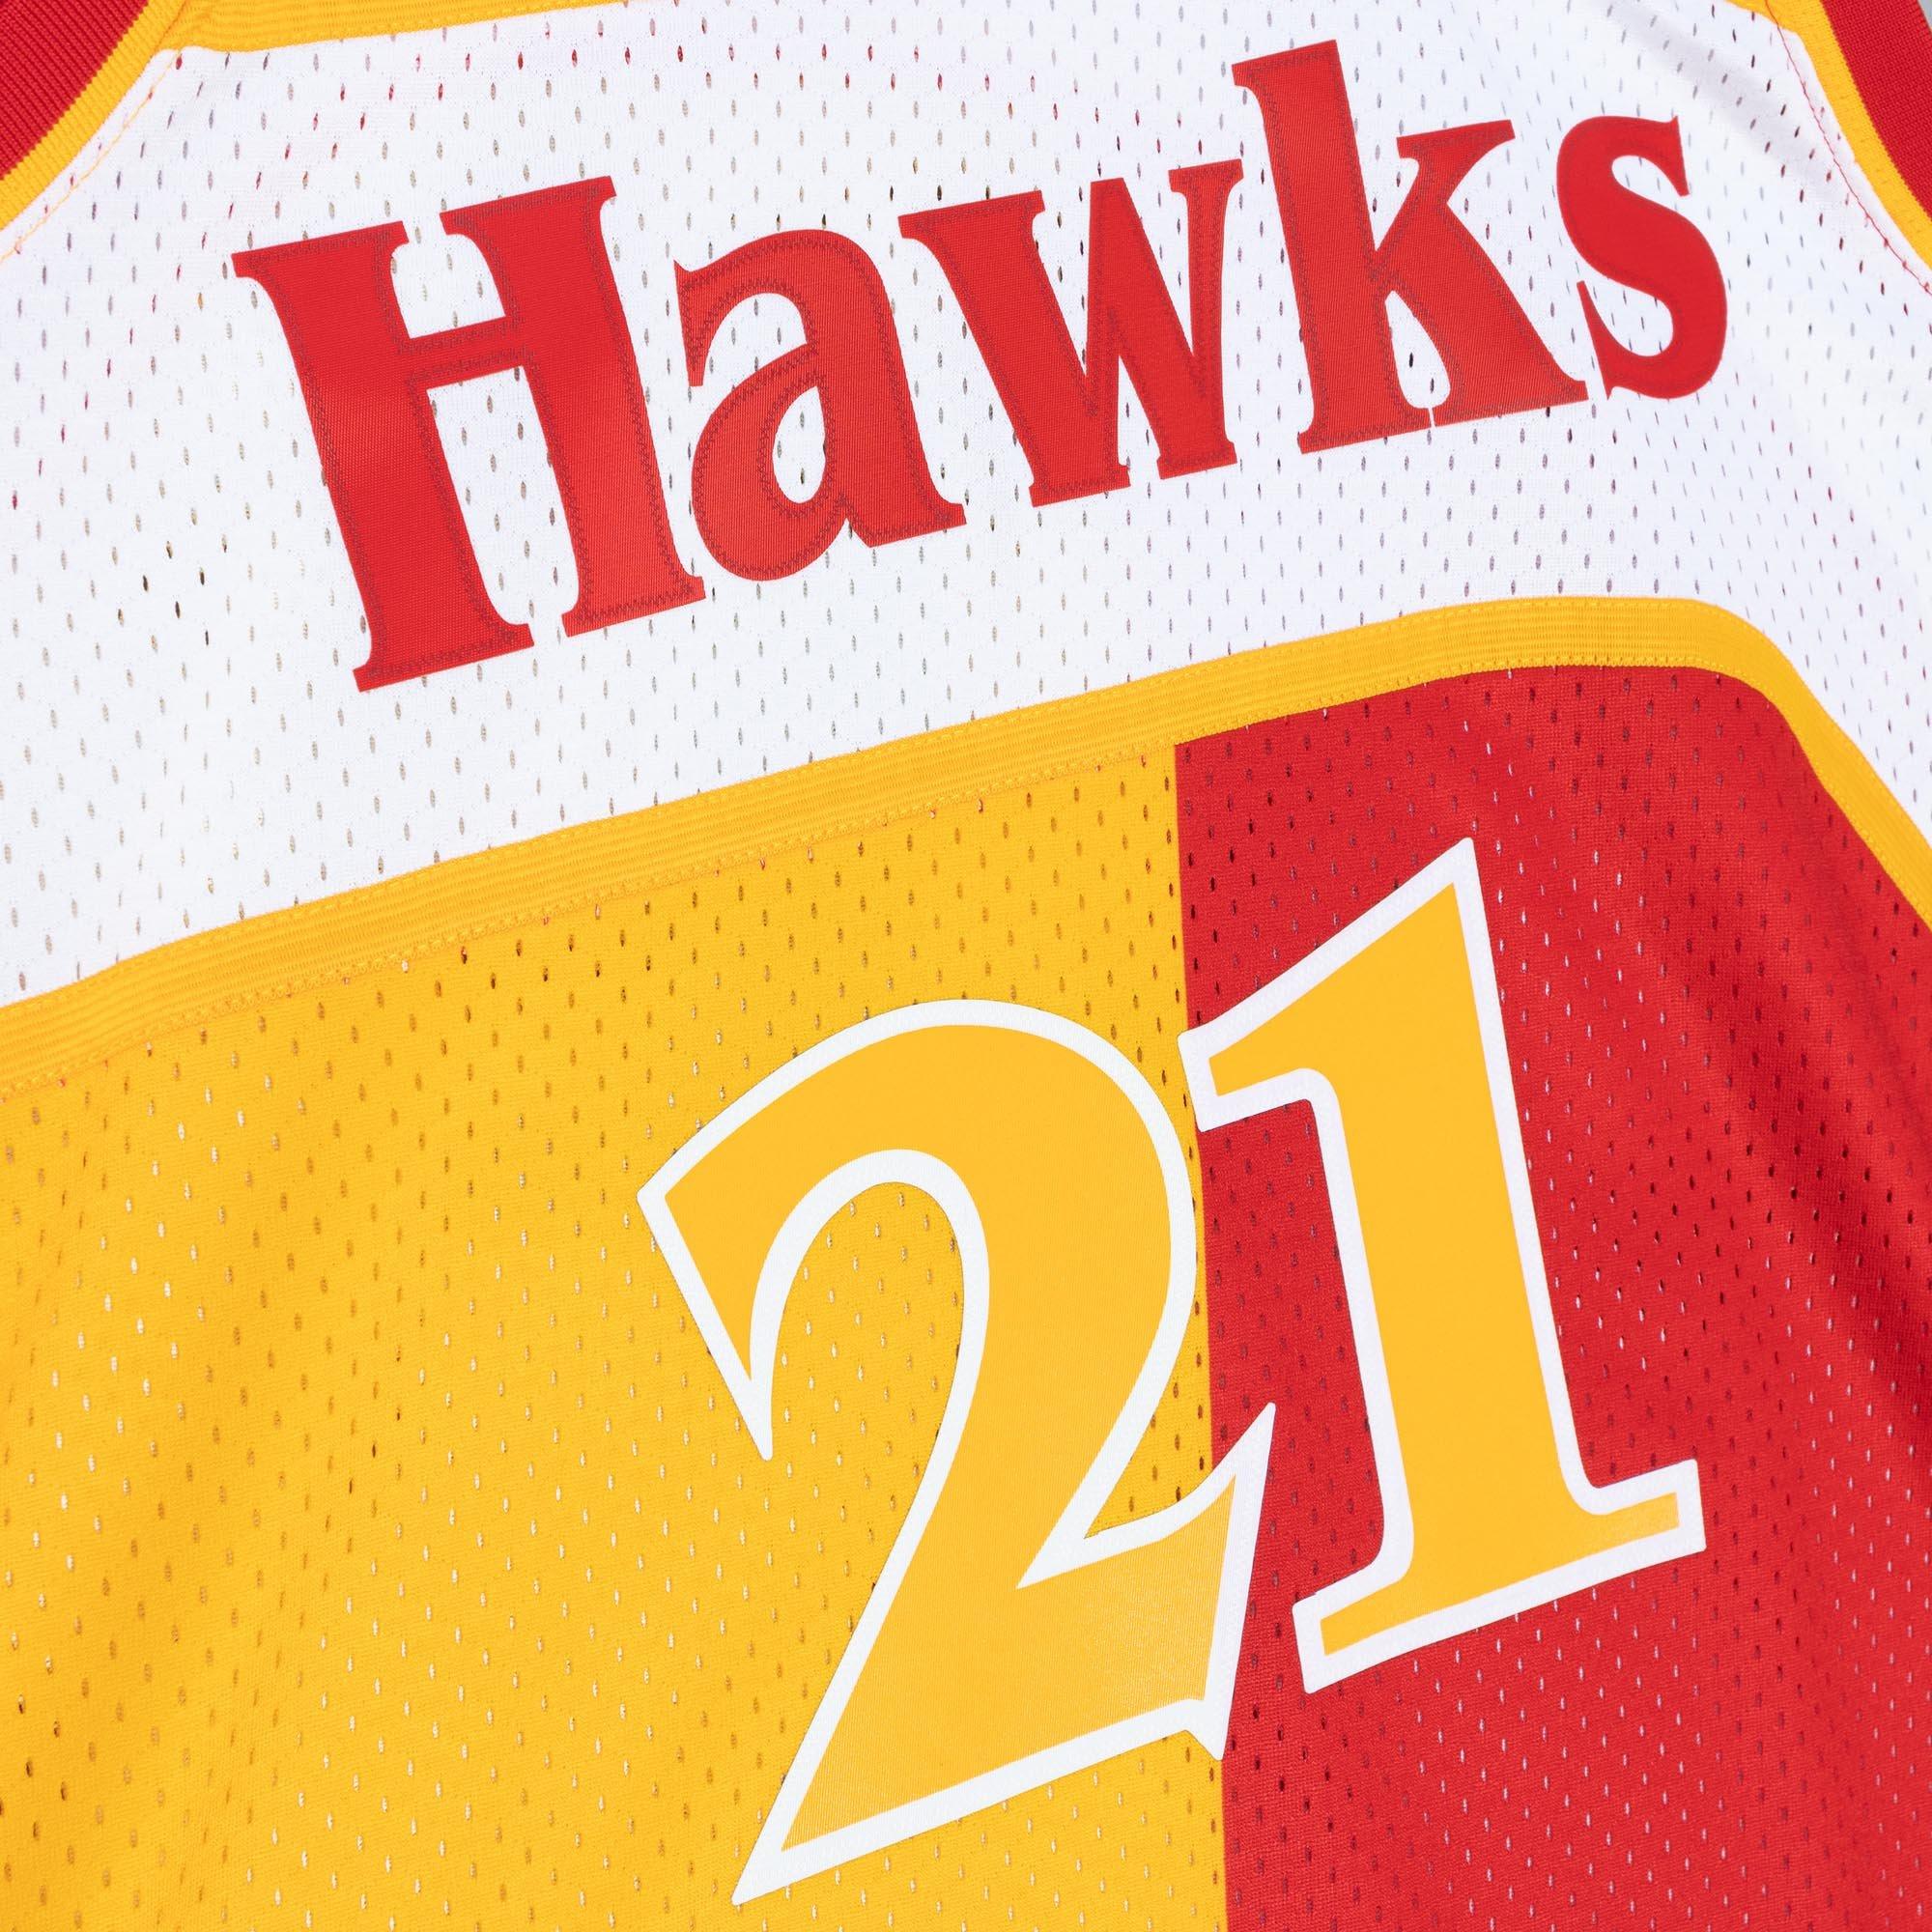 Dominique Wilkins Atlanta Hawks Jersey NBA BOYS/YOUTH M & N RED/YELLOW